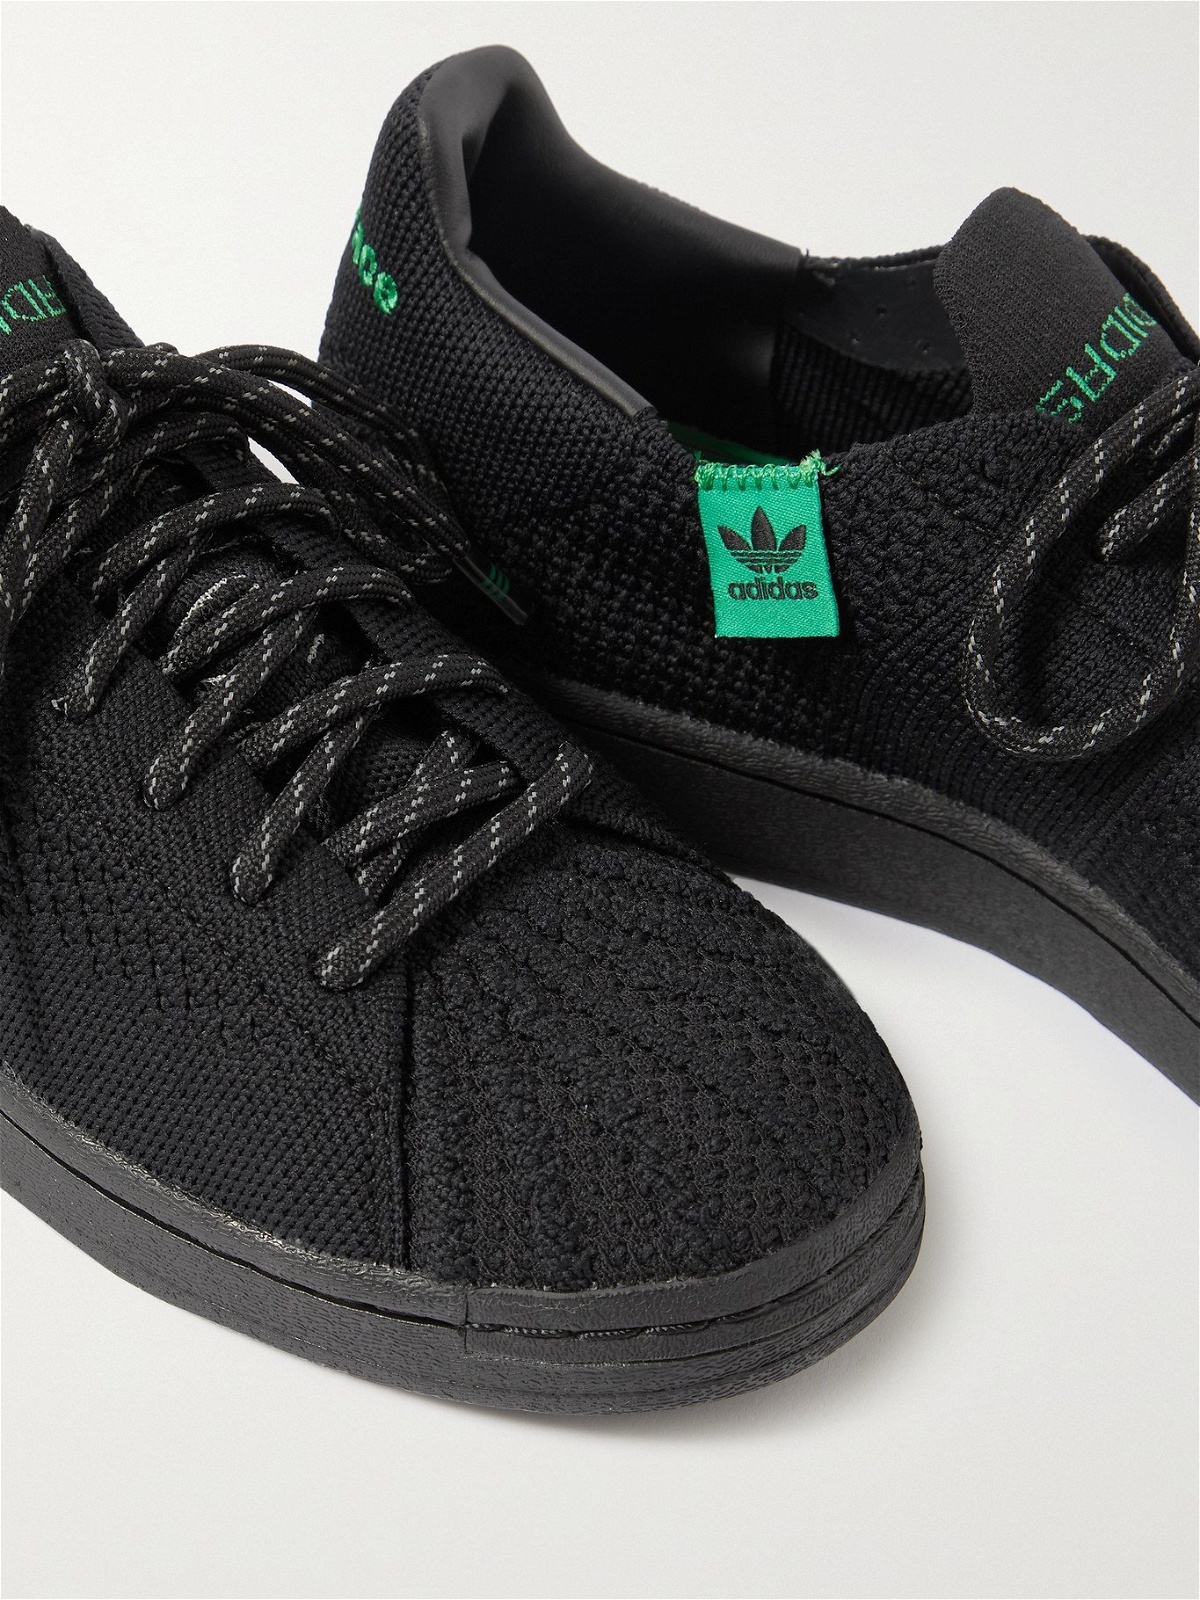 ADIDAS ORIGINALS - Pharrell Williams Superstar Primeknit Sneakers - Black -  UK 7 adidas Originals